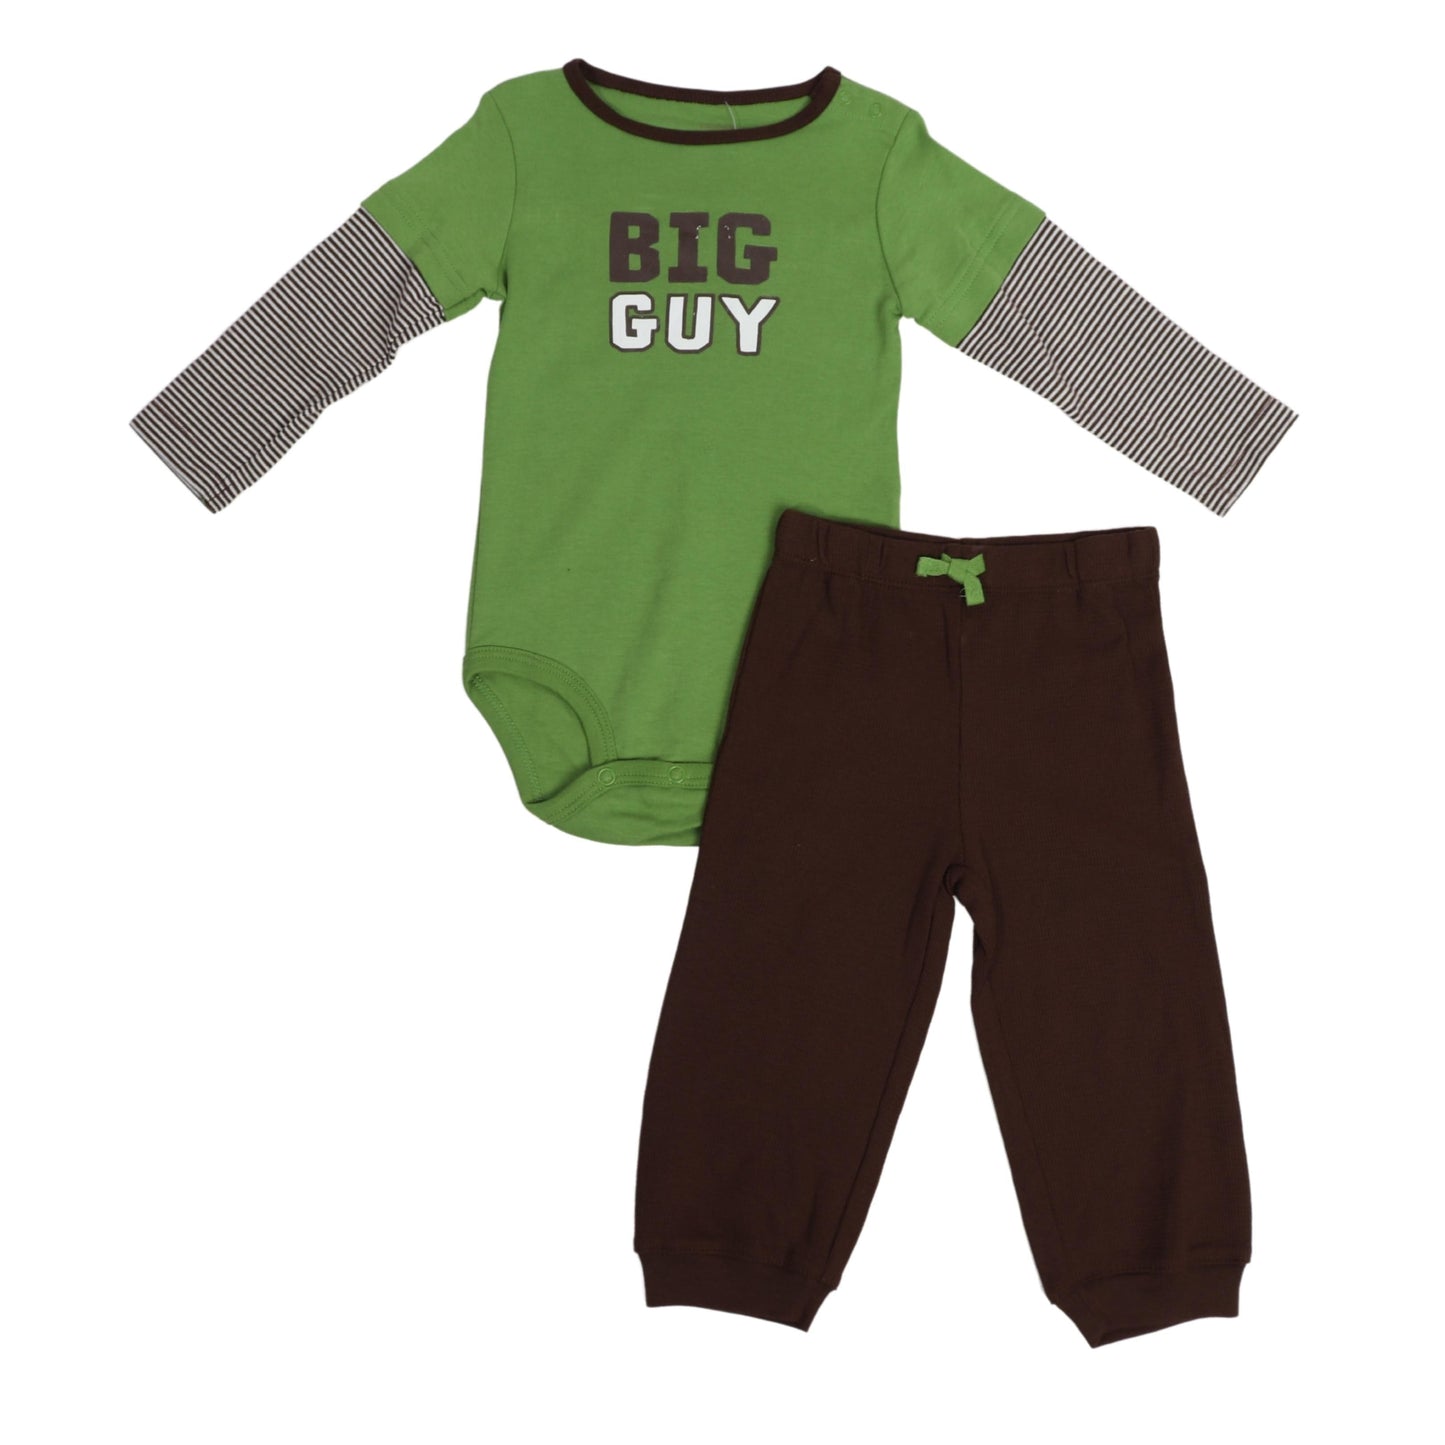 CARTER'S Baby Boy 18 Month / Green CARTER'S - Stripped Pajama Set